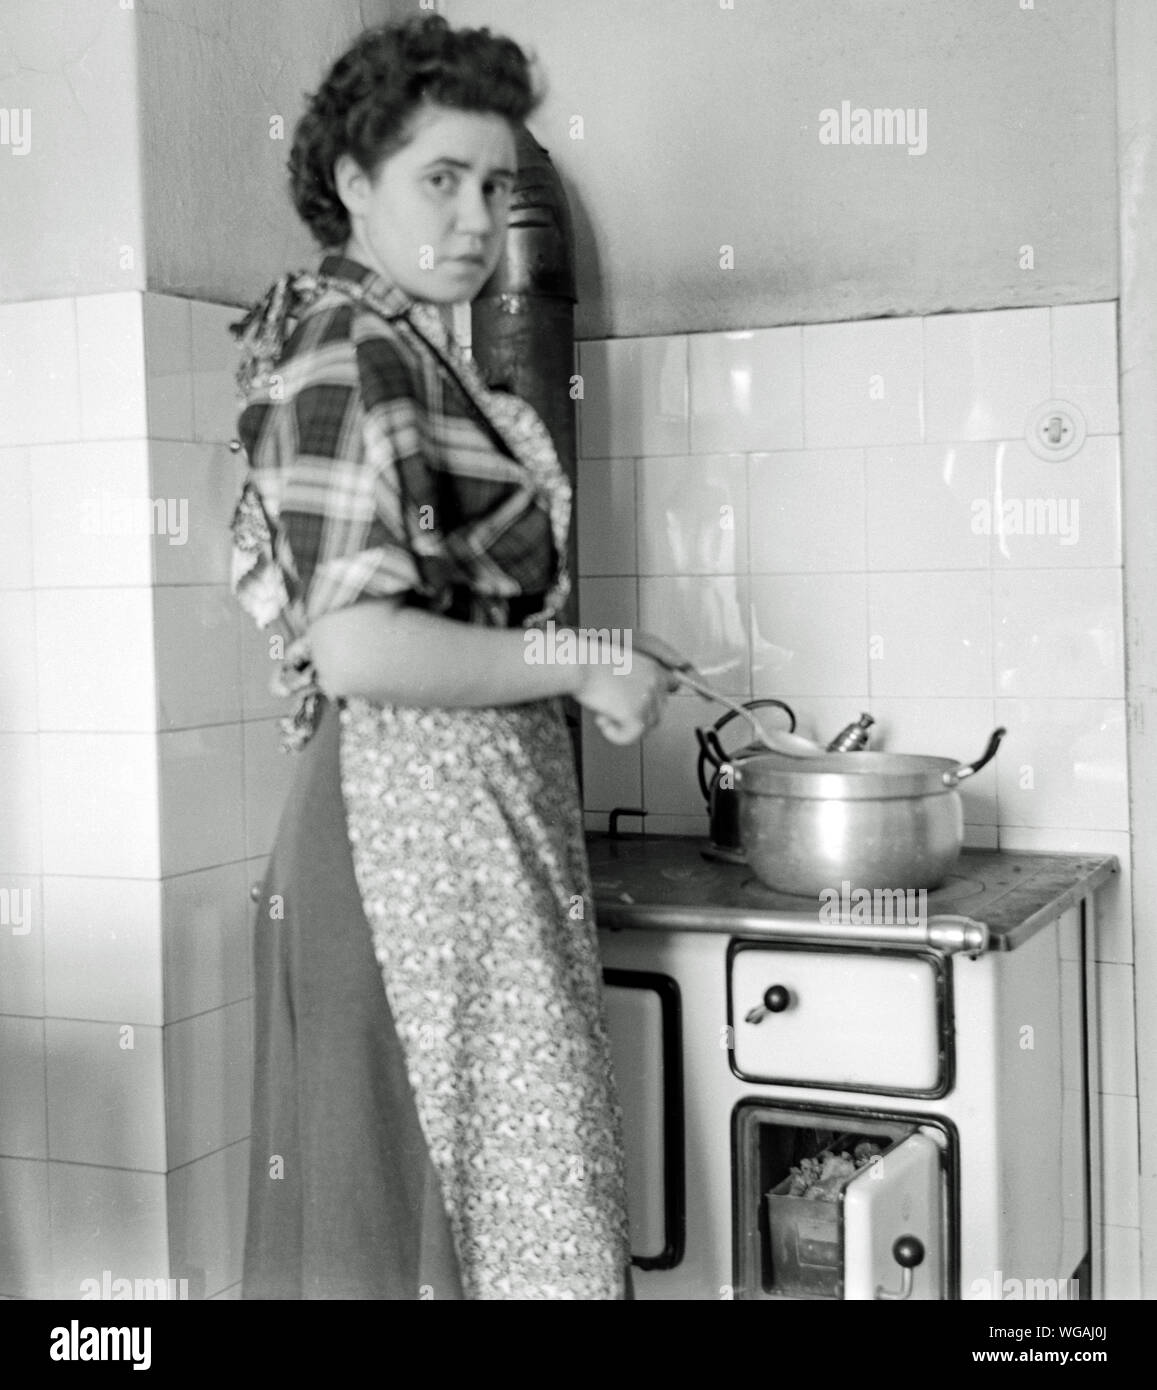 Europa, Deutschland, Amburgo, Hausfrau am Kohleherd beim Kochen, 1950er Jahre . / Europa, Germania, Amburgo, casalinga vicino alla stufa a carbone, cottura , 1950th . Foto Stock